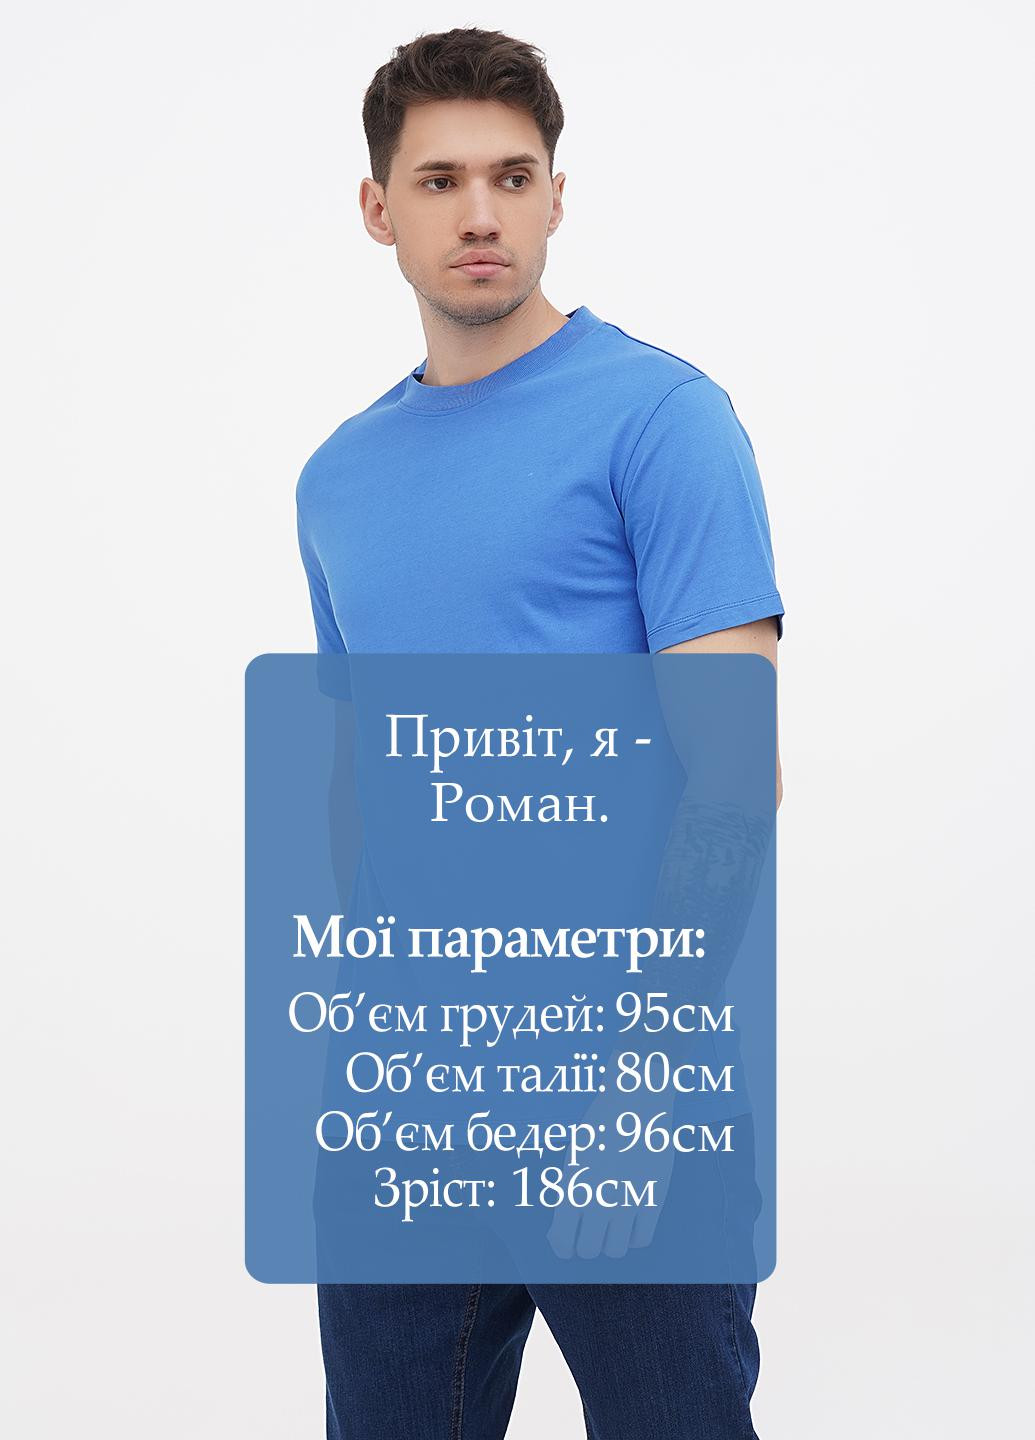 Голубая футболка Minimum